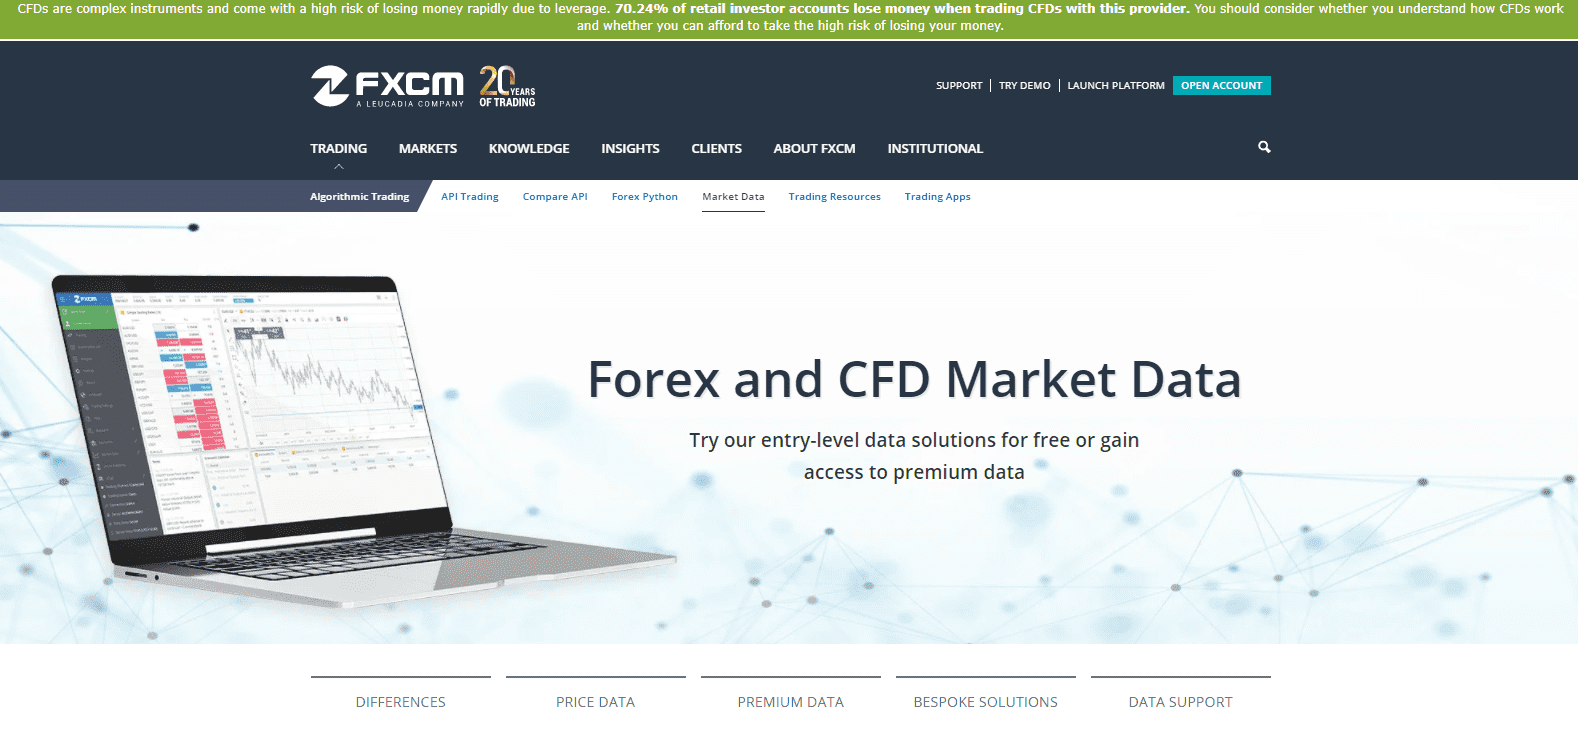 FXCM's top notch market data offering